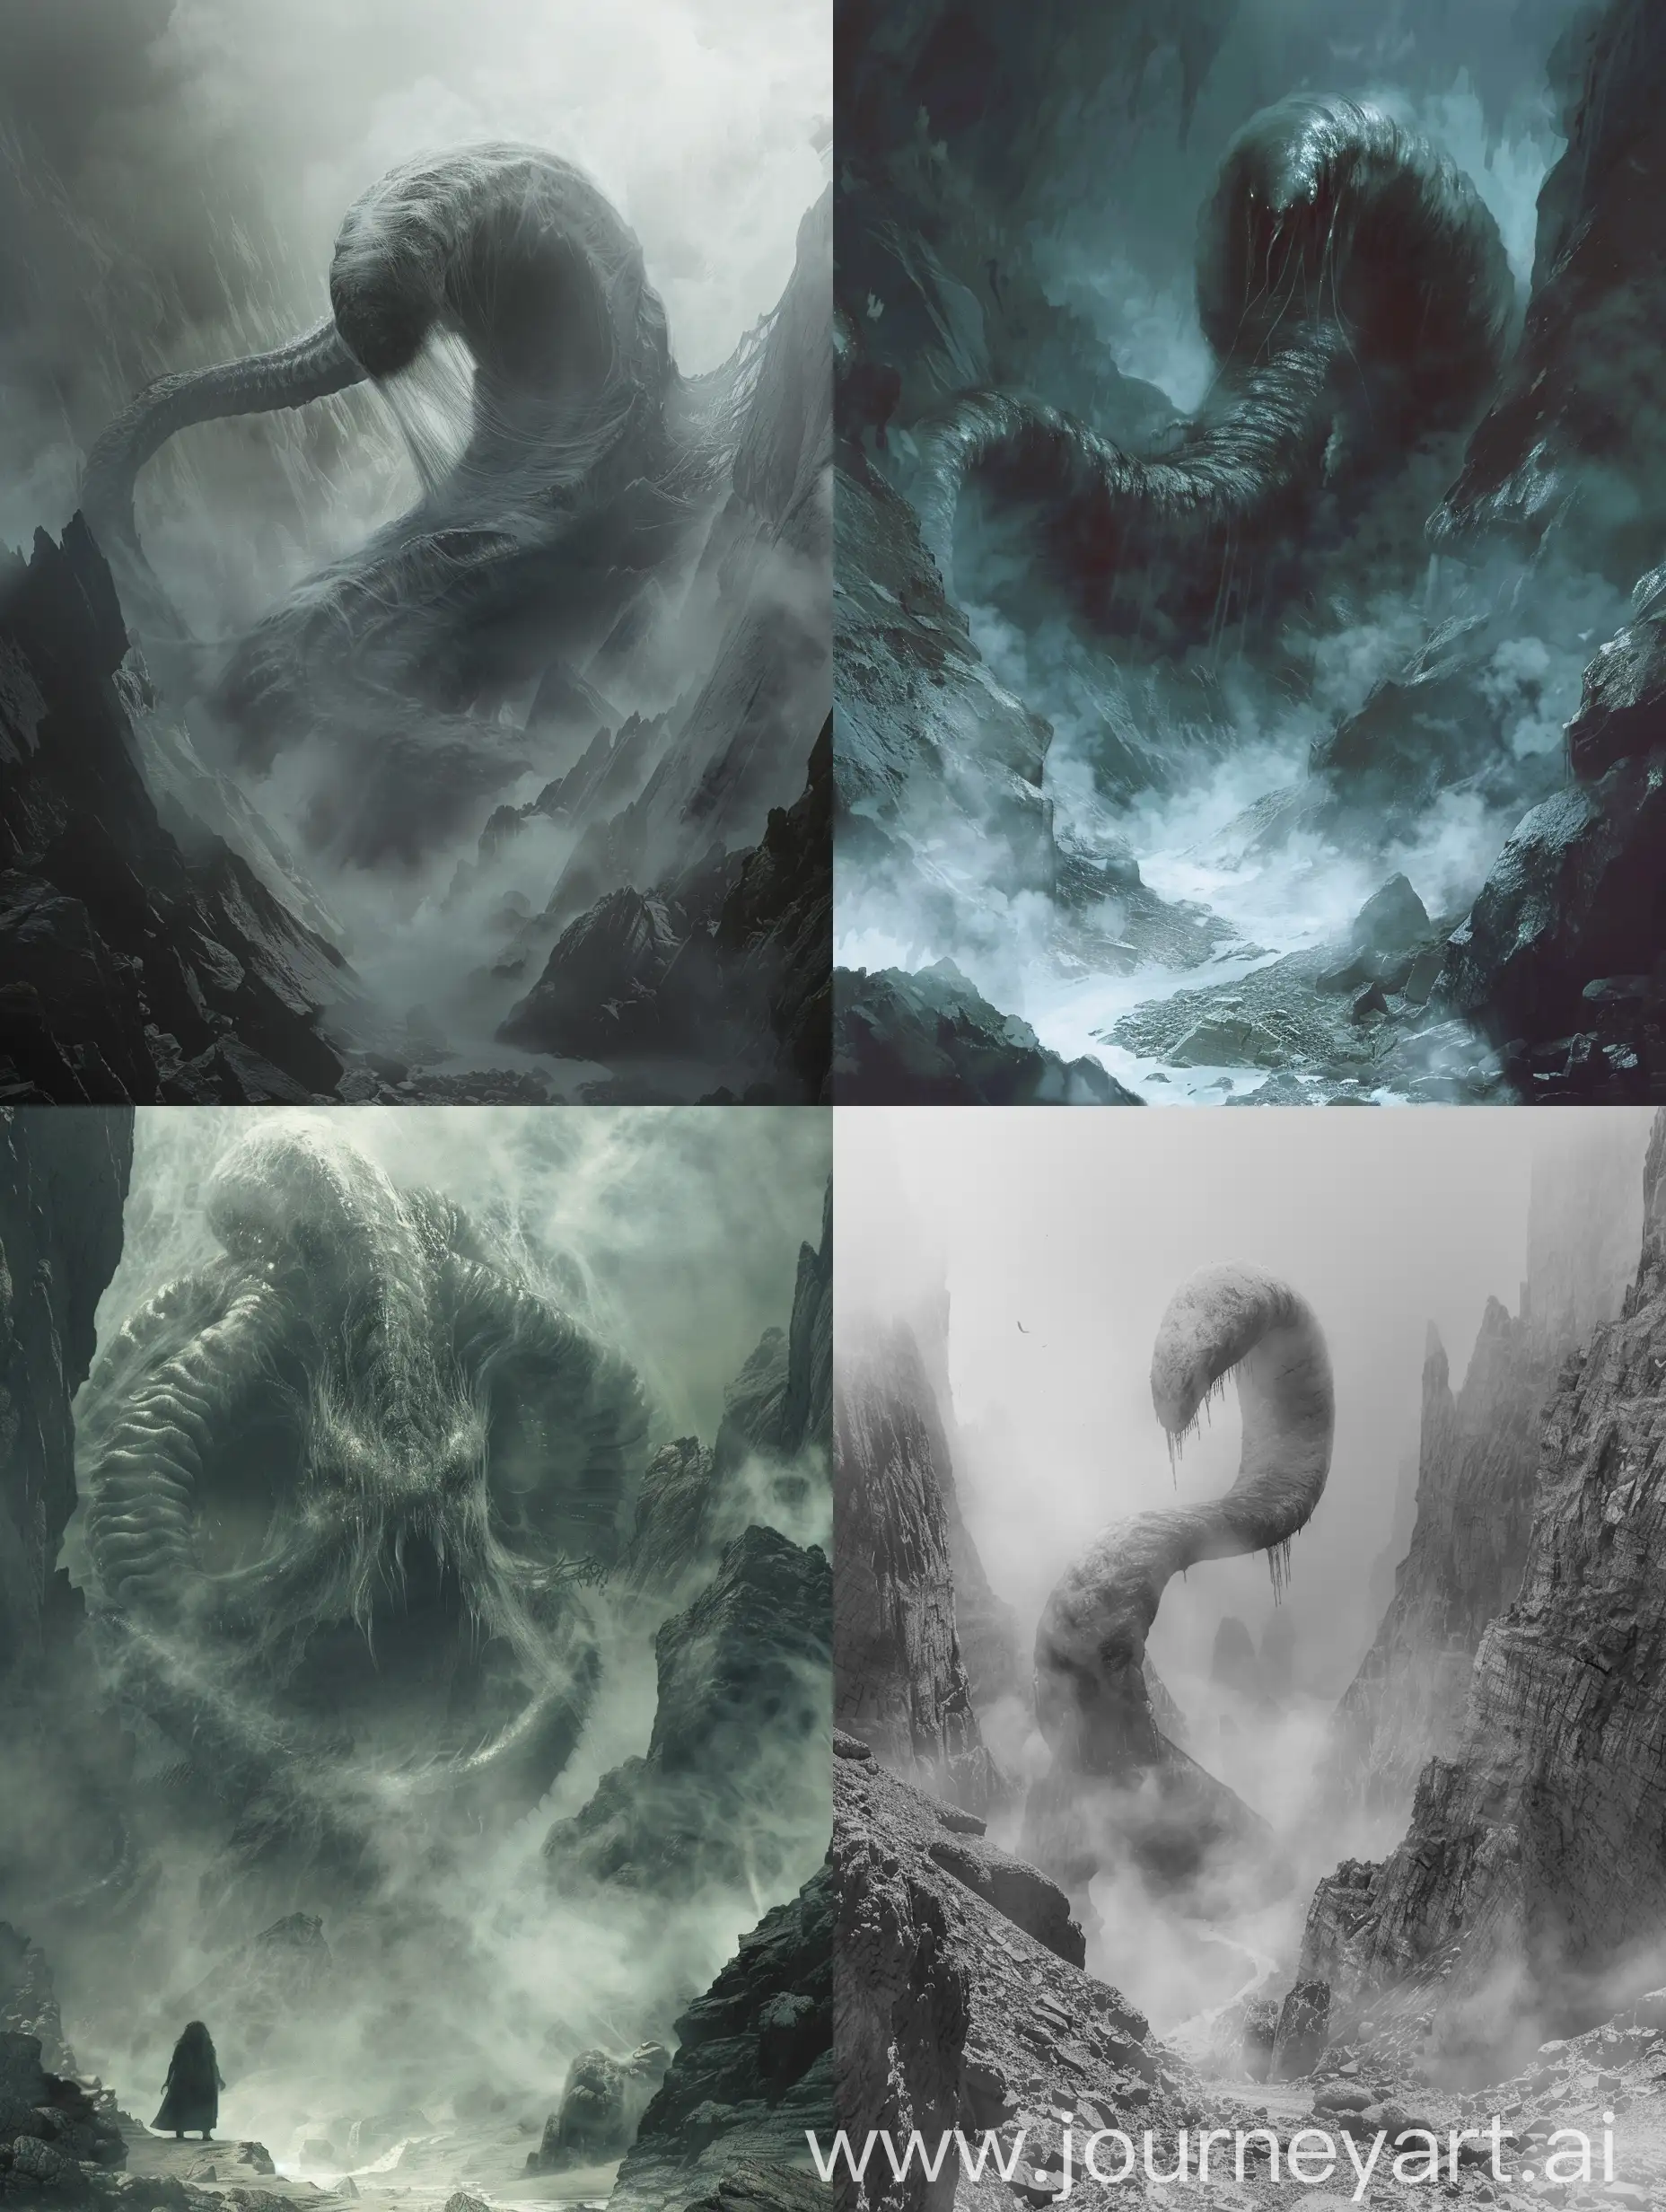 Formidable-Faceless-Monster-in-Earths-Abyssal-Depths